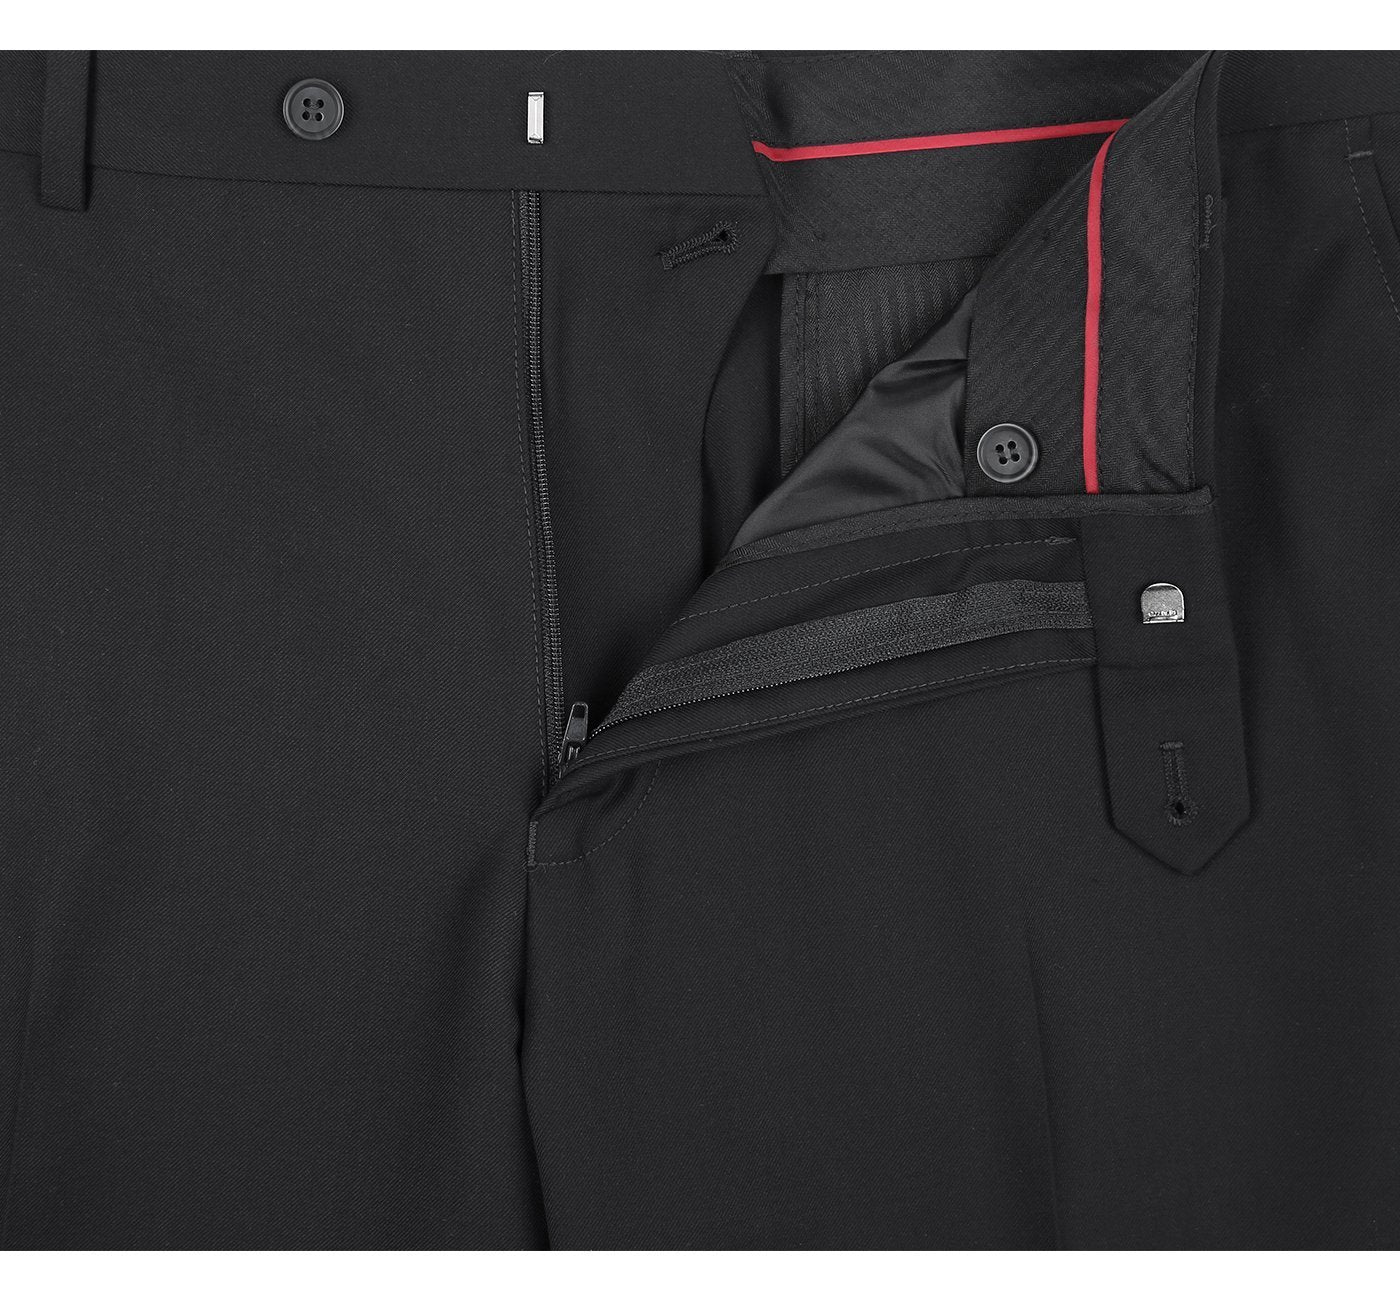 201-1 Men's 2-Piece Single Breasted Black Notch Lapel Suit